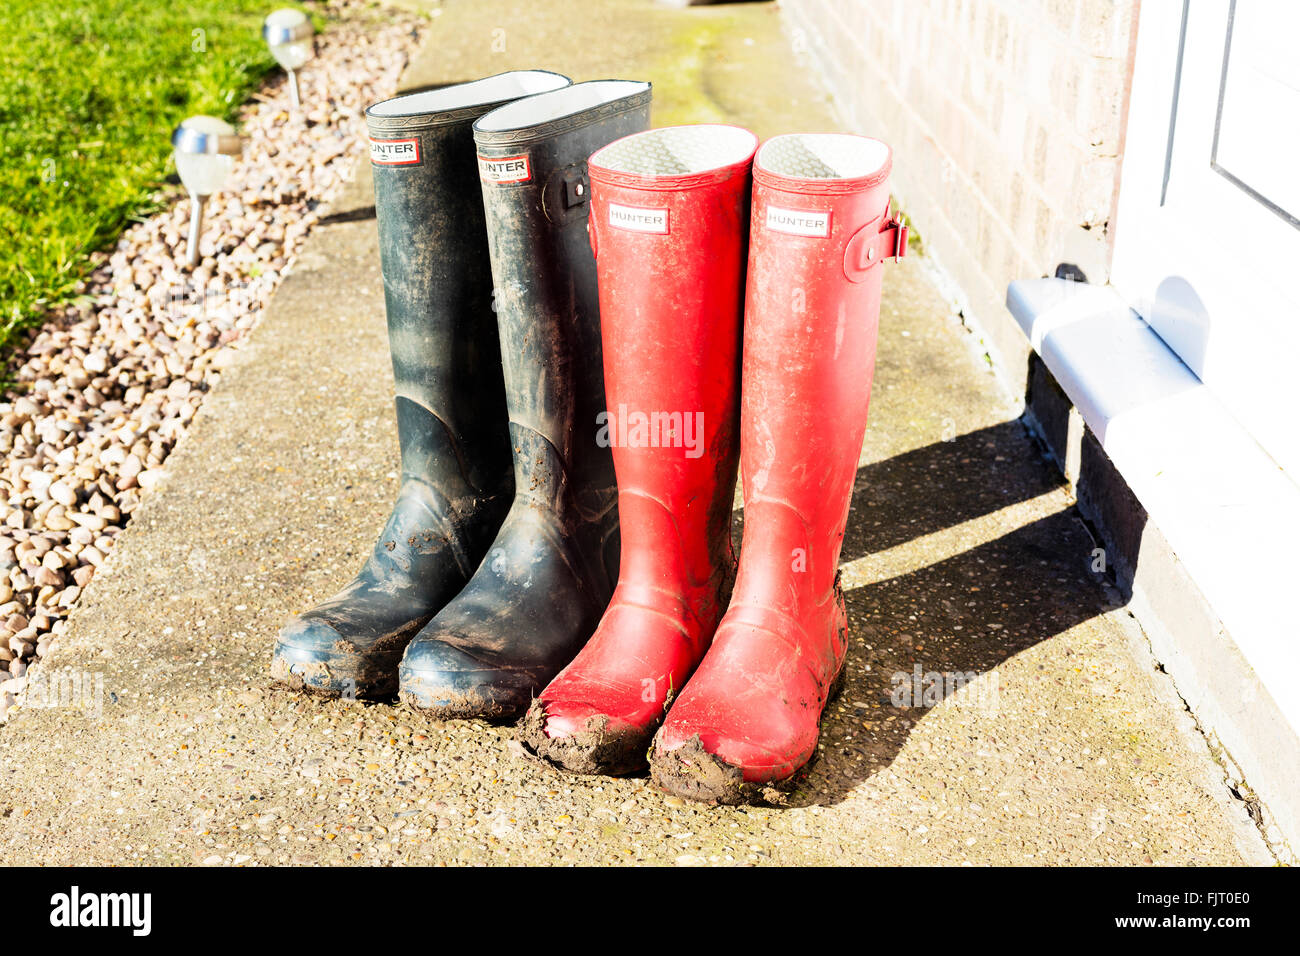 Muddy boots wellington wellingtons wellies outside mud walk Hunters make brand Stock Photo